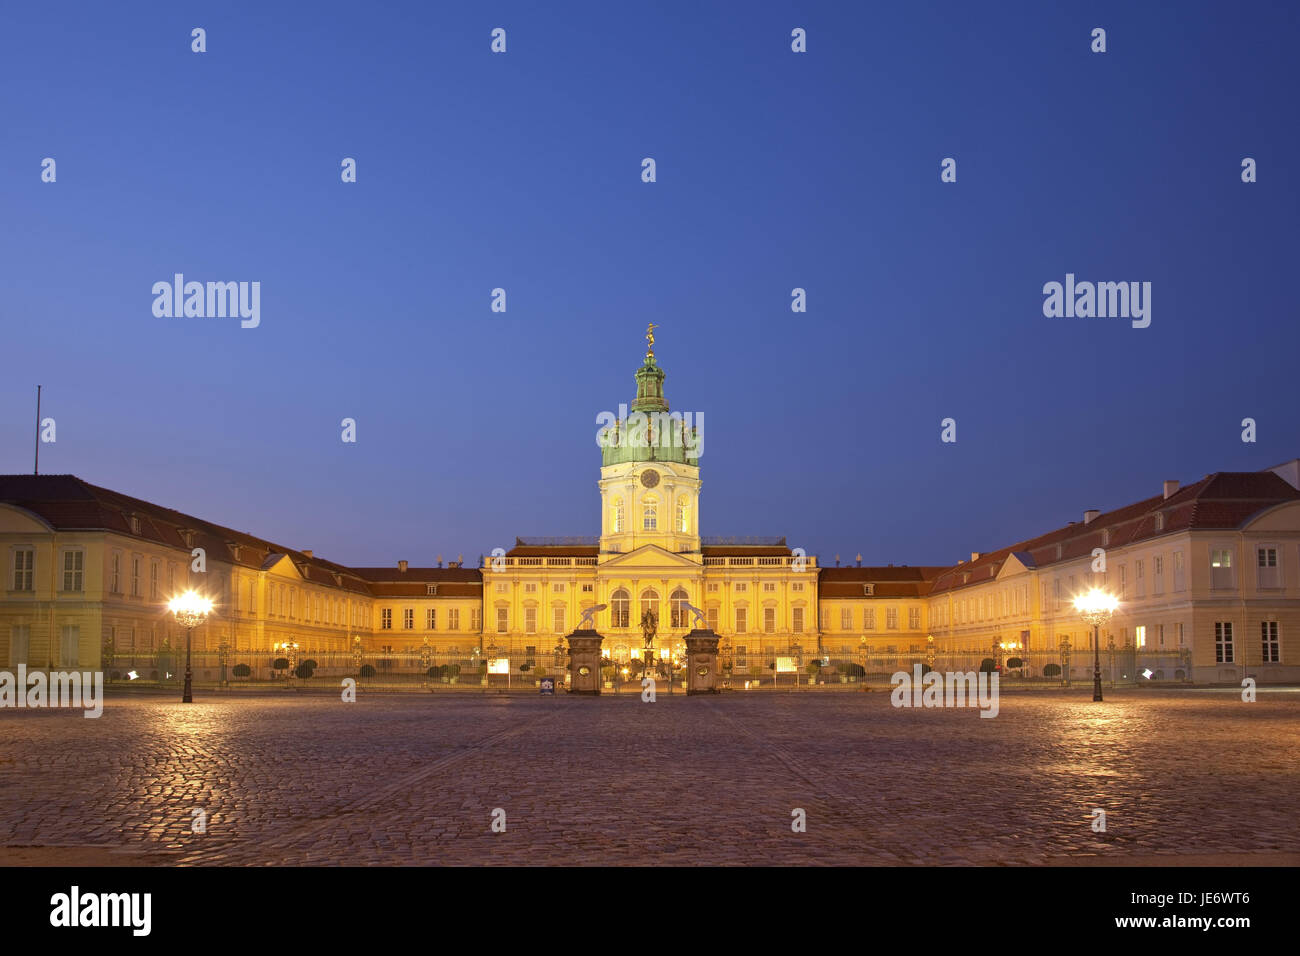 Germany, Berlin, capital, Charlottenburg, lock Charlottenburg, foundation of Prussian locks and gardens Berlin-Brandenburg, Stock Photo